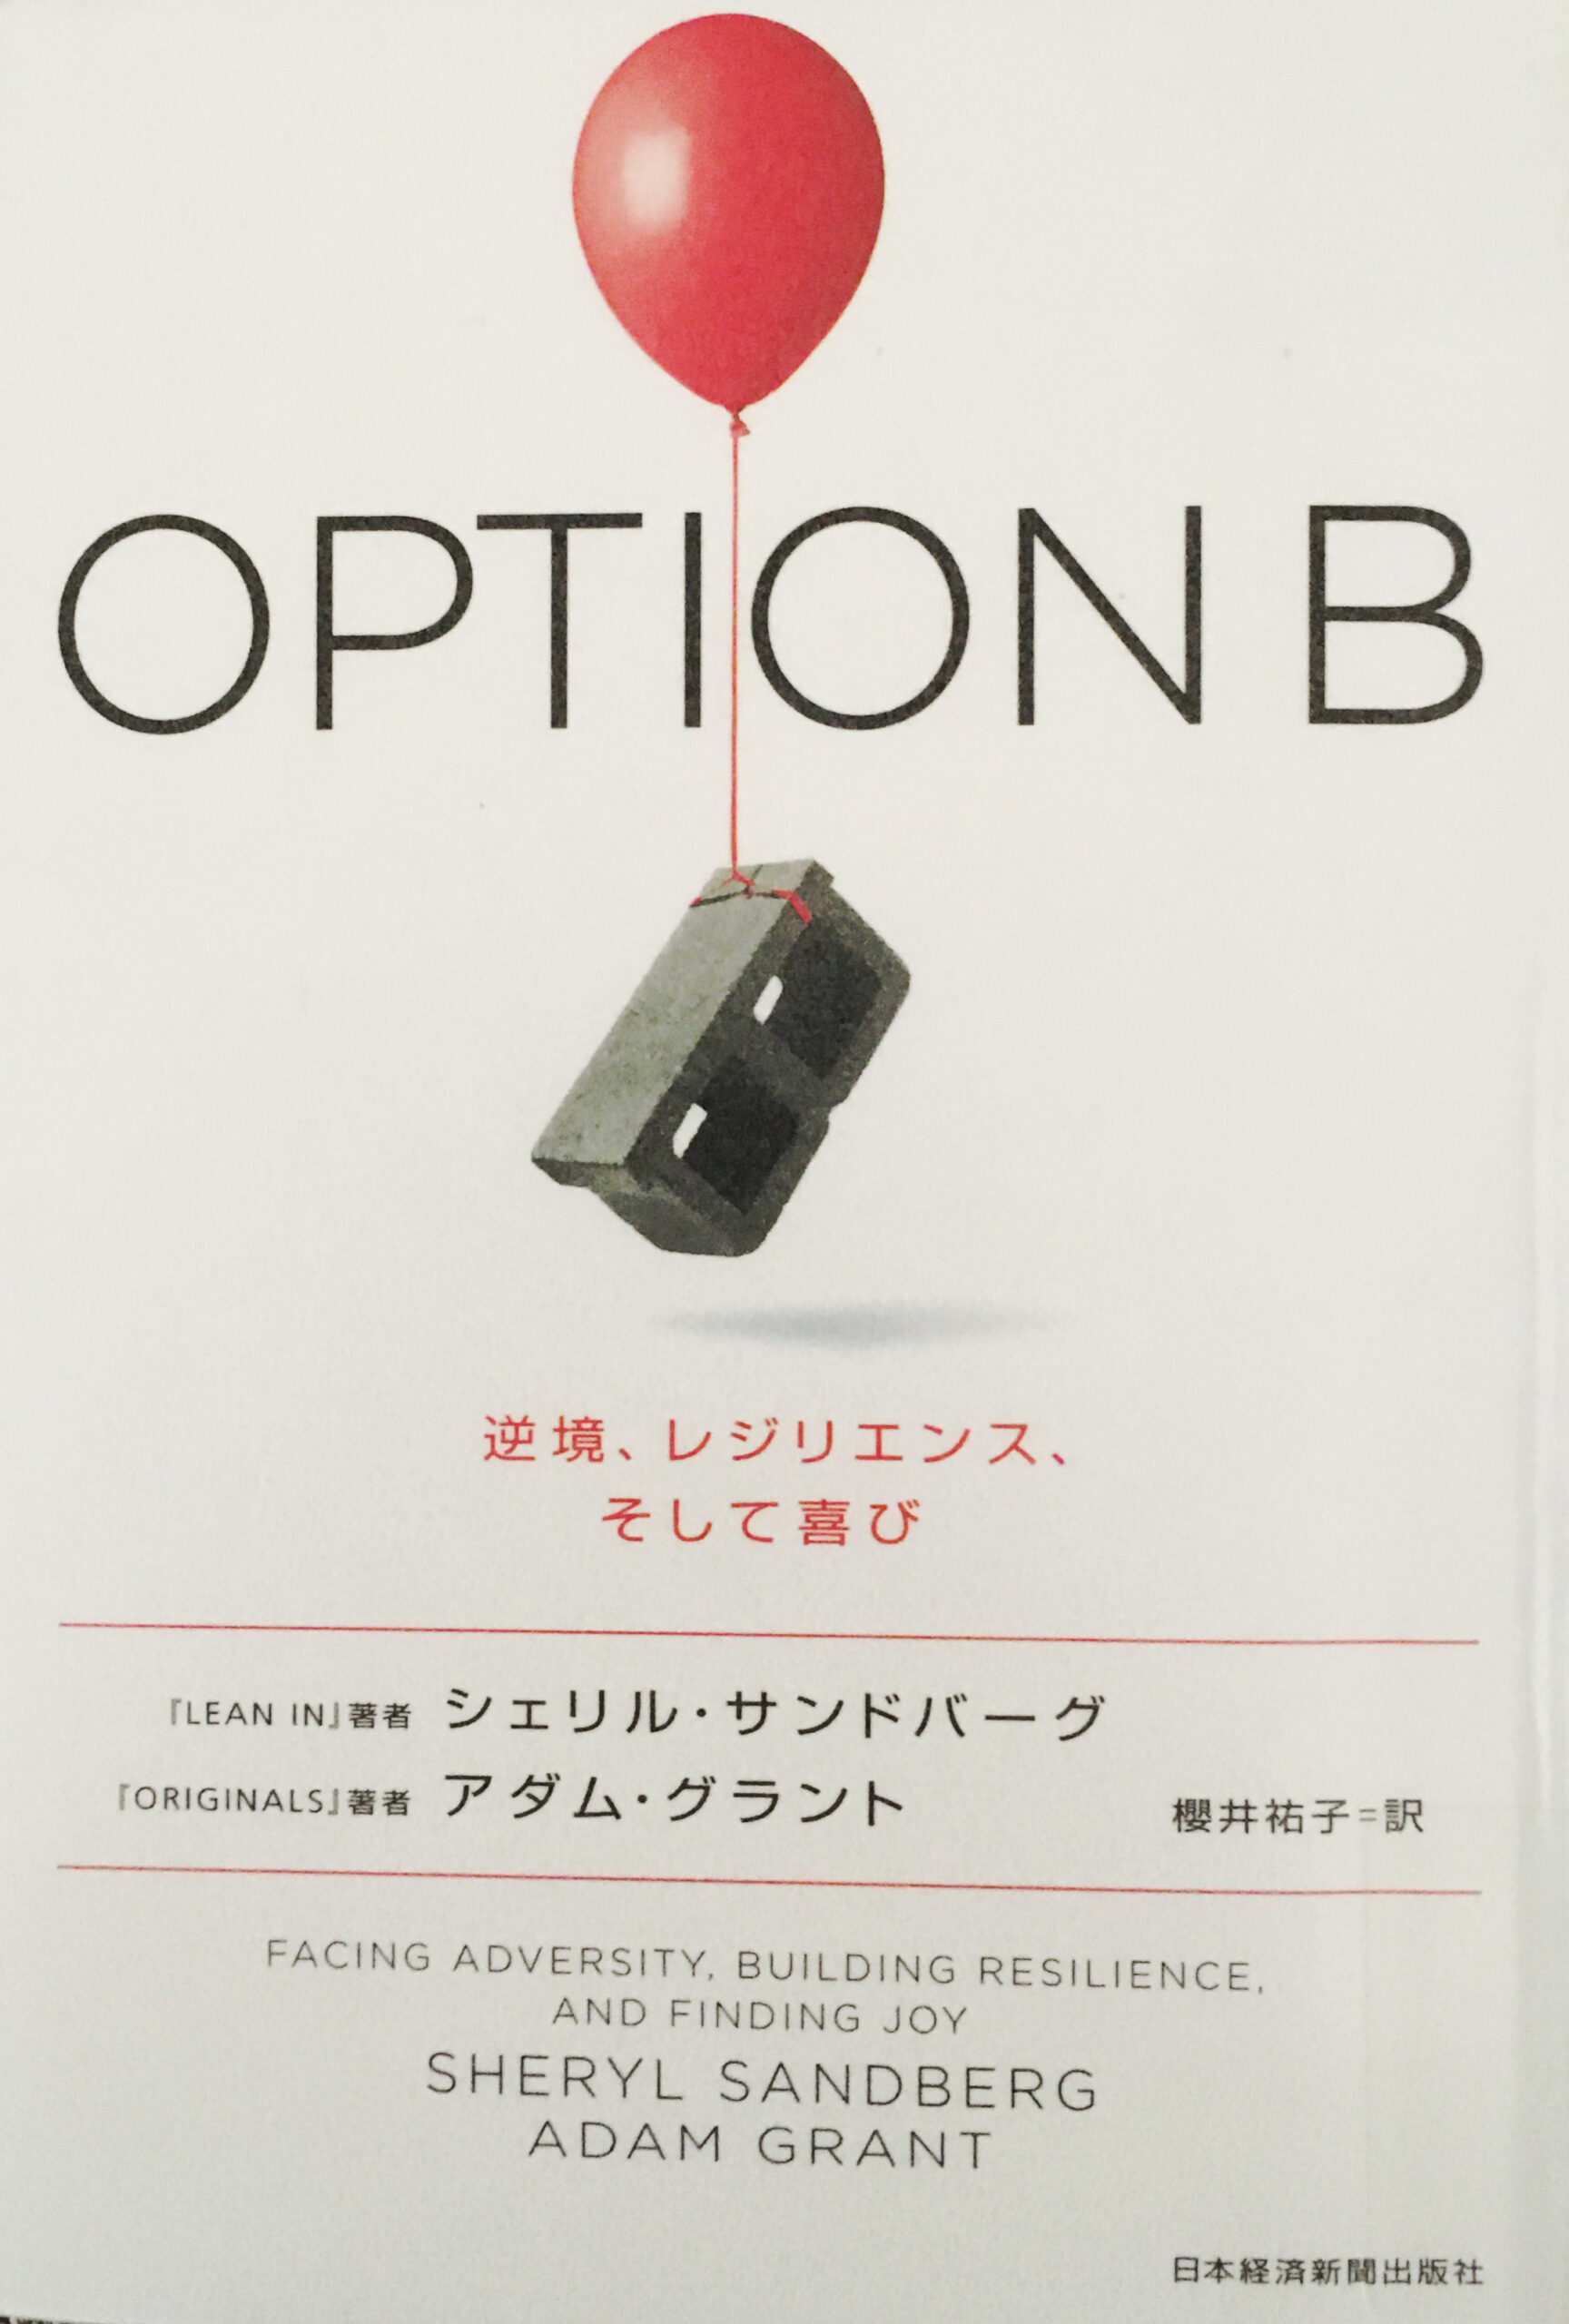 OPTION B